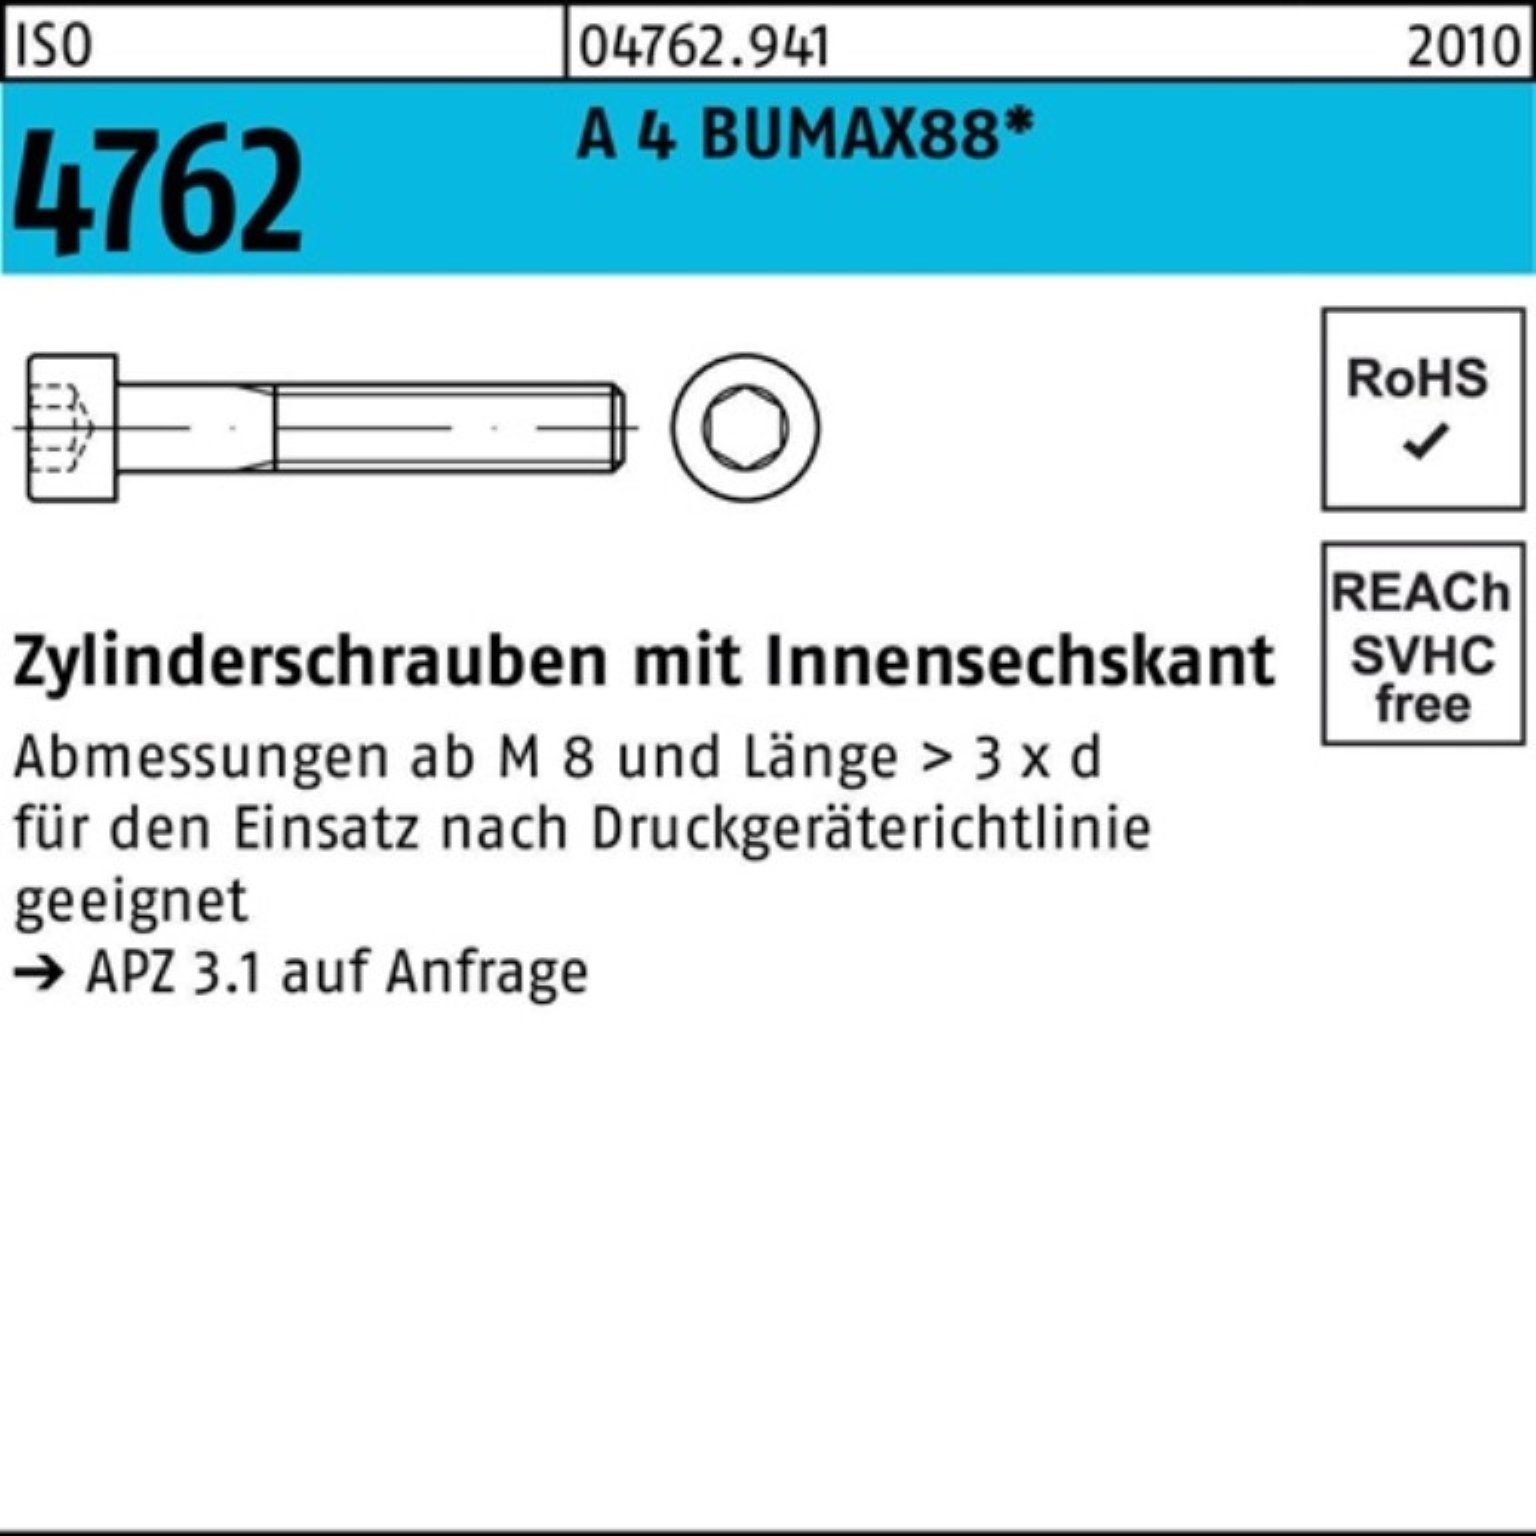 Bufab Zylinderschraube 100er Pack A M5x Innen-6kt 100 4762 4 25 BUMAX88 ISO Zylinderschraube